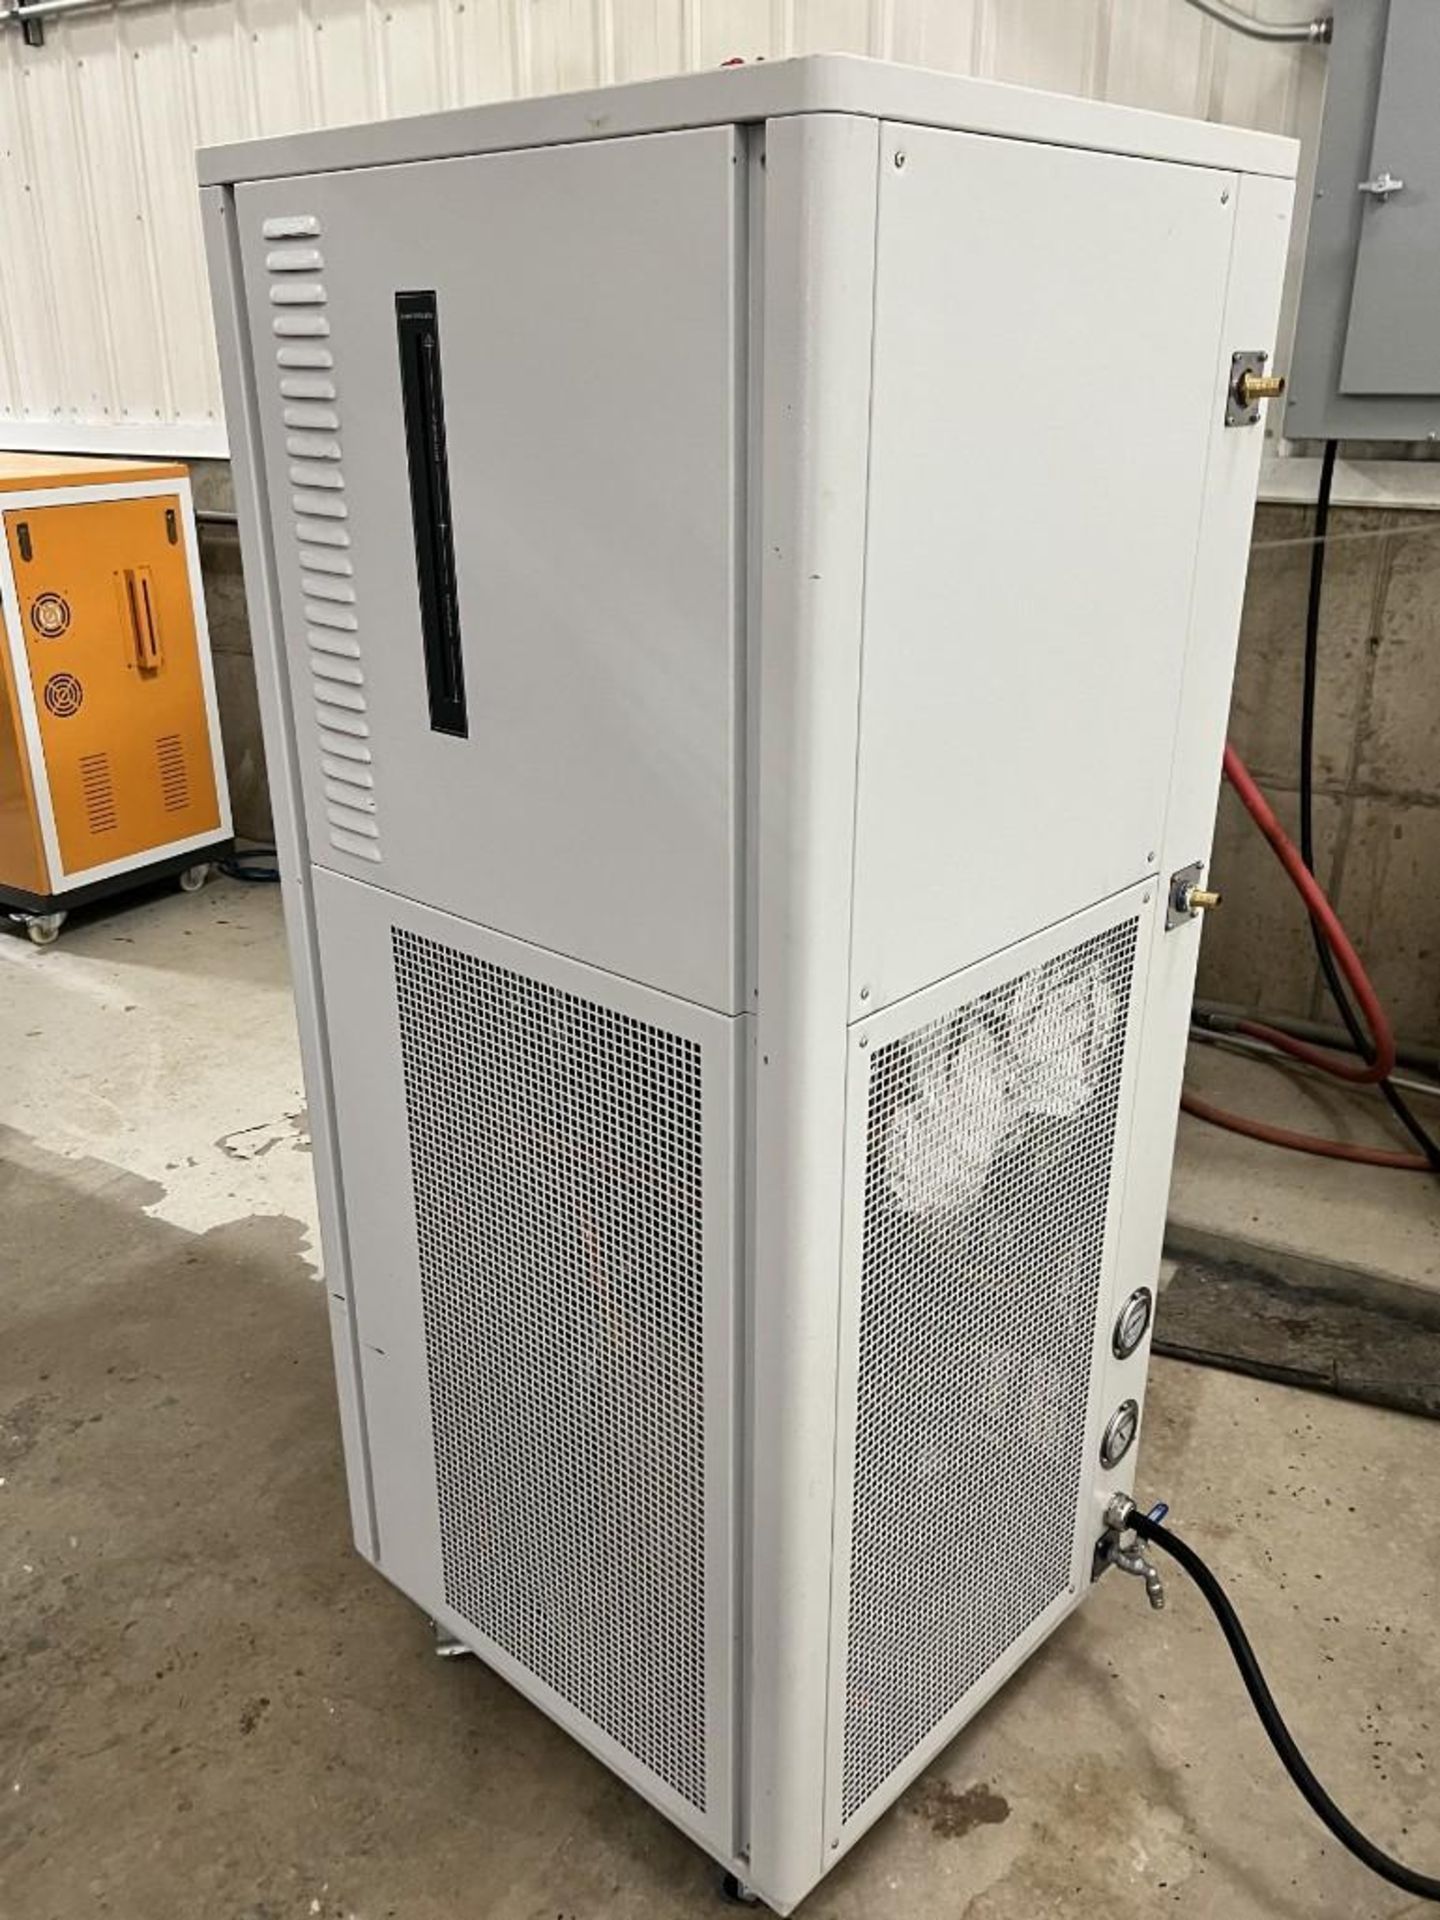 YHCHEM Heating & Cooling Circulator, Model YHR-100T, Built 06/2019. - Image 3 of 7